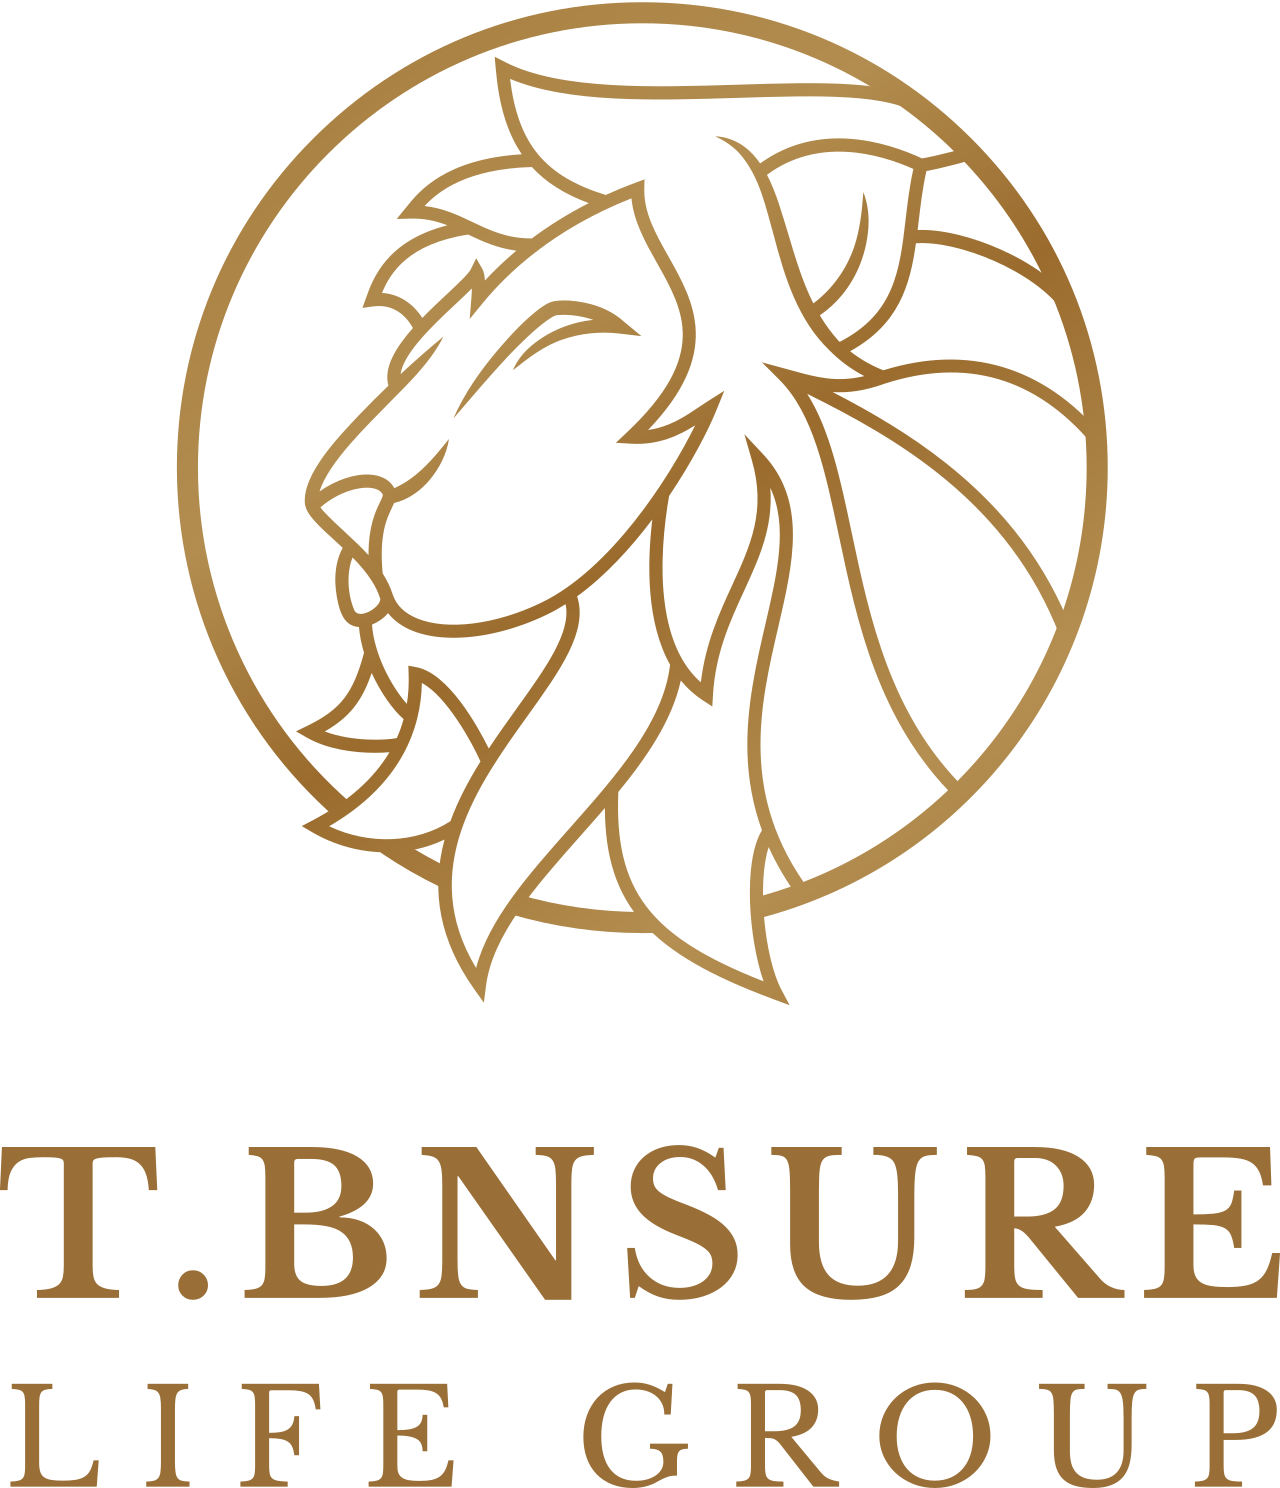 T.BNSURE's logo